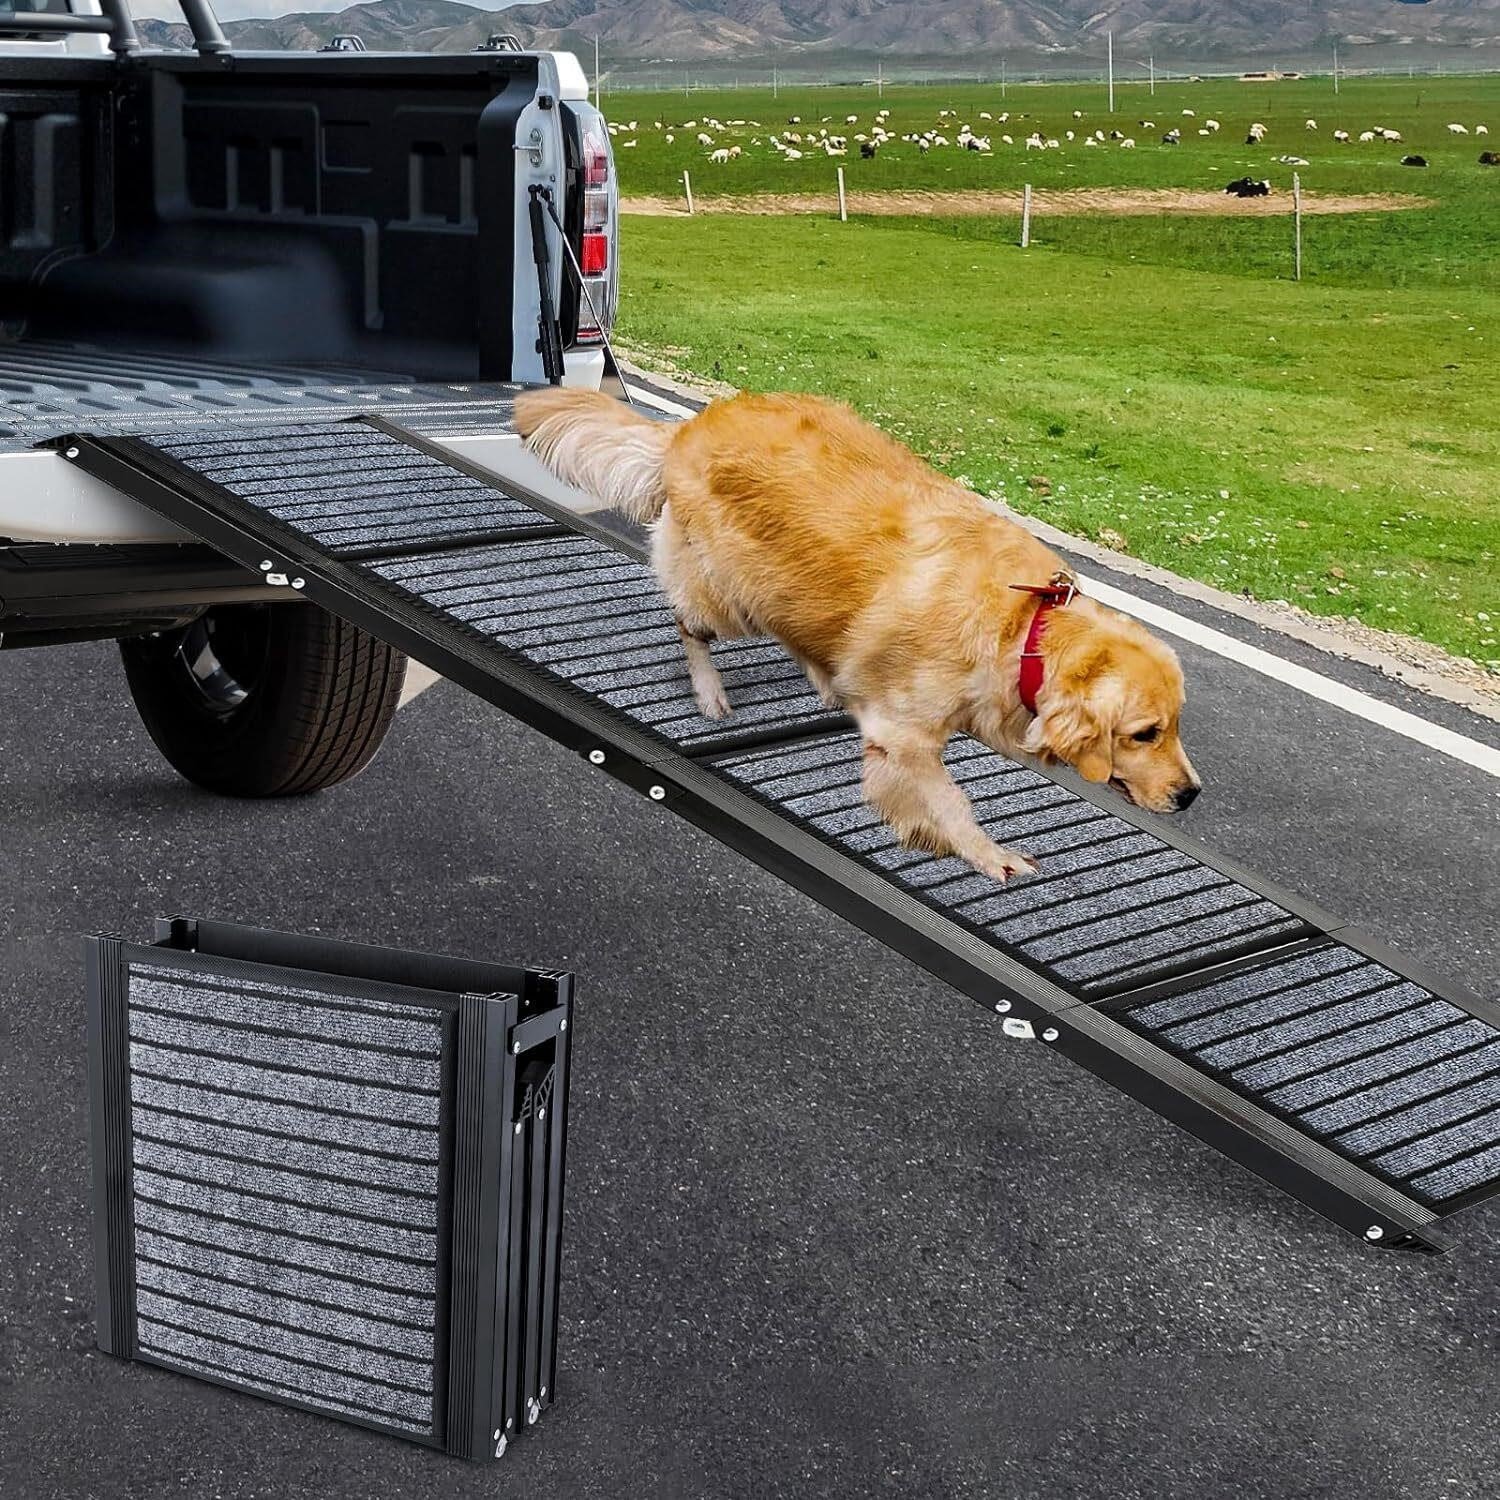 Foldable Dog Car Ramp  Non-Slip  71L x 17W